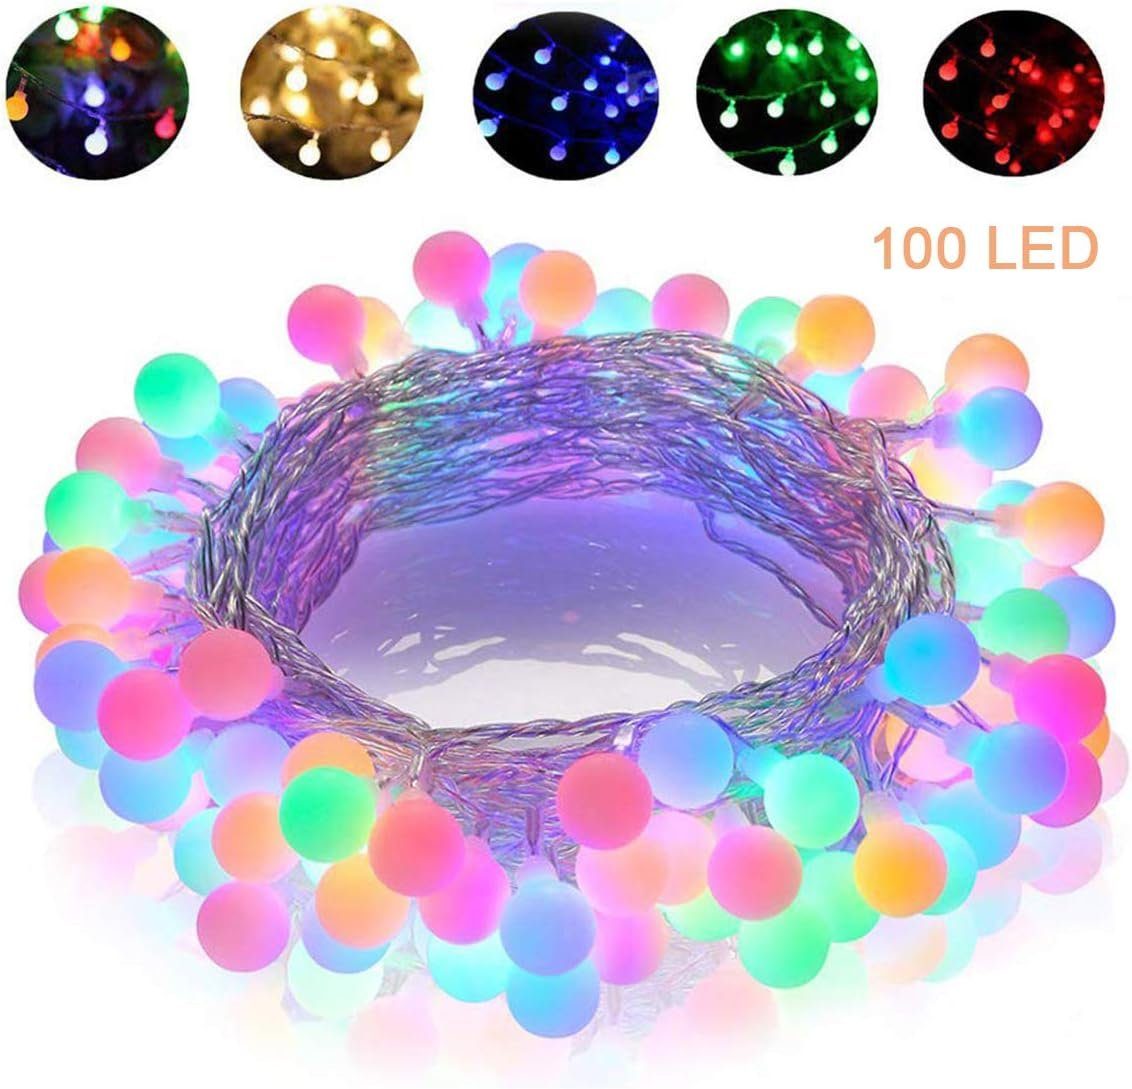 Jormftte LED-Lichterkette Mehrfarbige 10M 100 LEDs Lichterketten,8 Beleuchtungsmodi,für Party